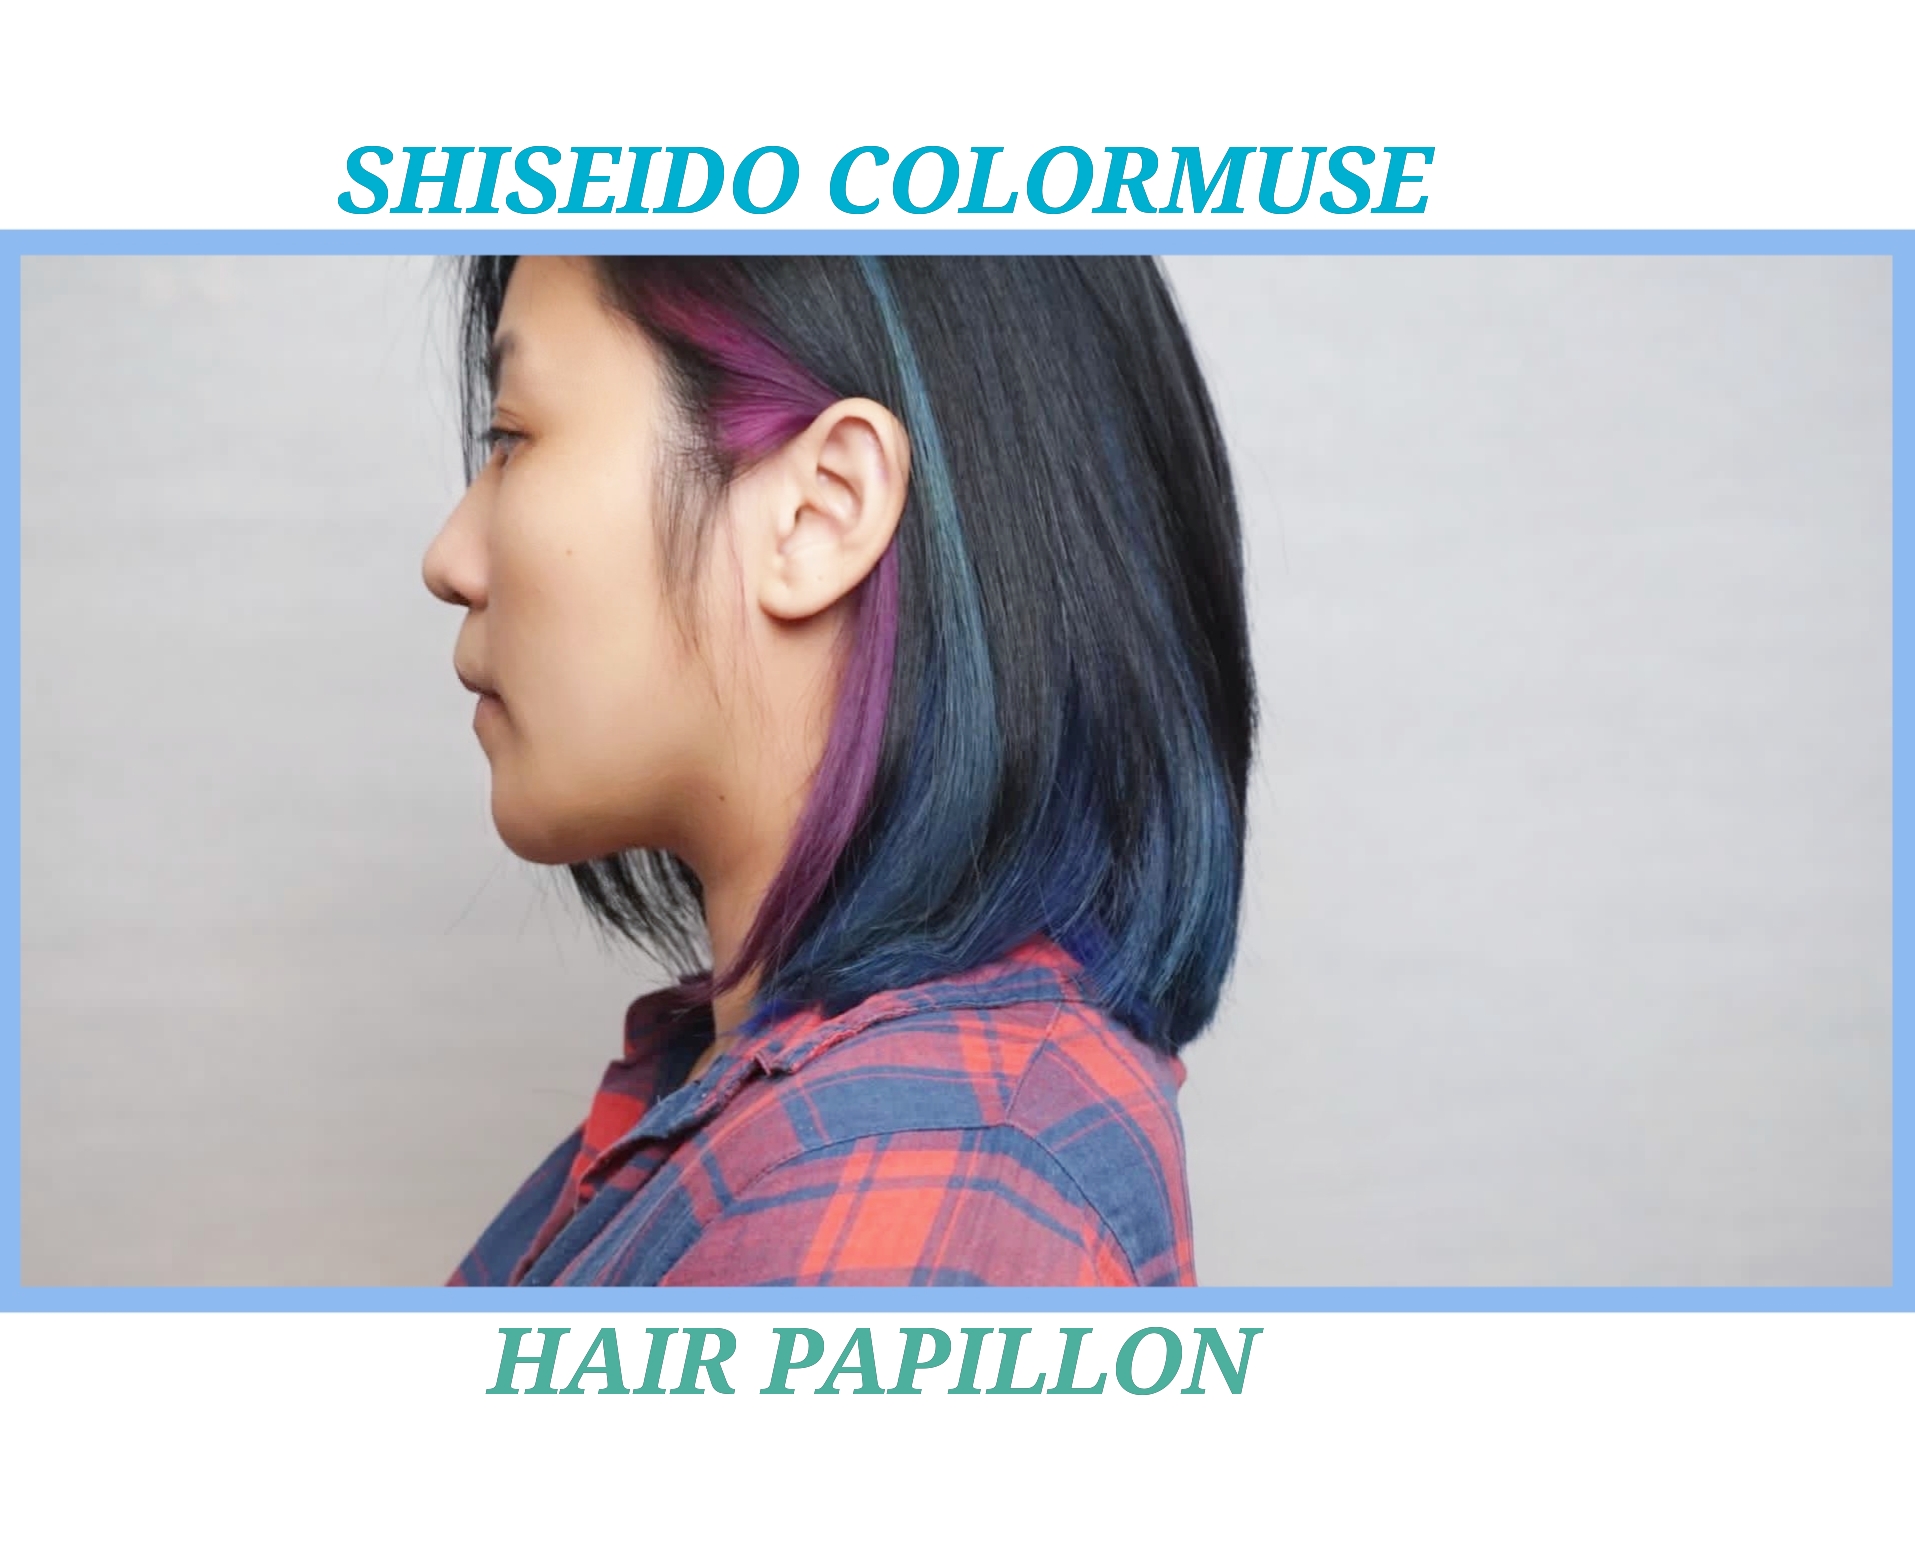 作品參考 / 最新消息:shiseido ultist